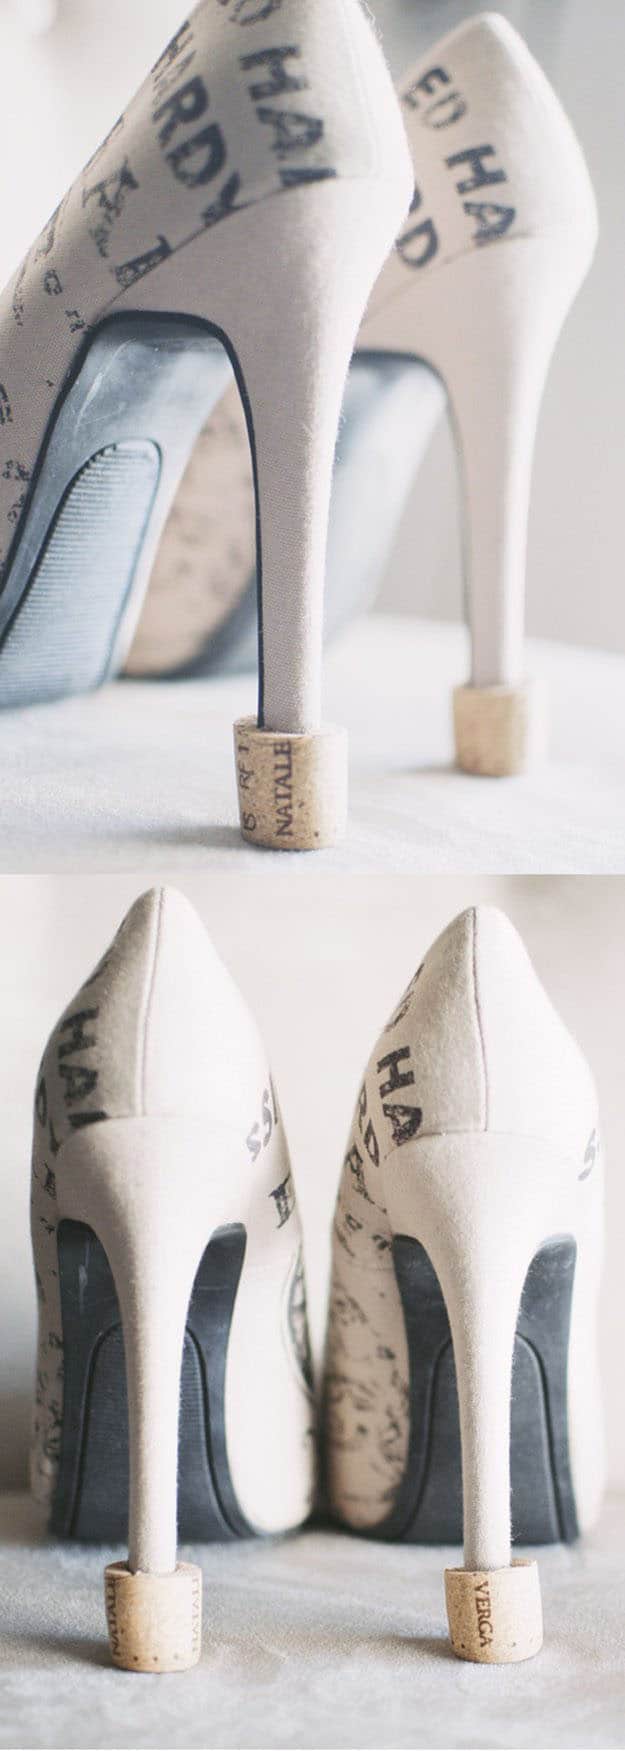 DIY Wine Cork Crafts for Easy Wedding Shoe Ideas - Wine Cork Shoe Savers - DIY Projects & Crafts by DIY JOY #crafts